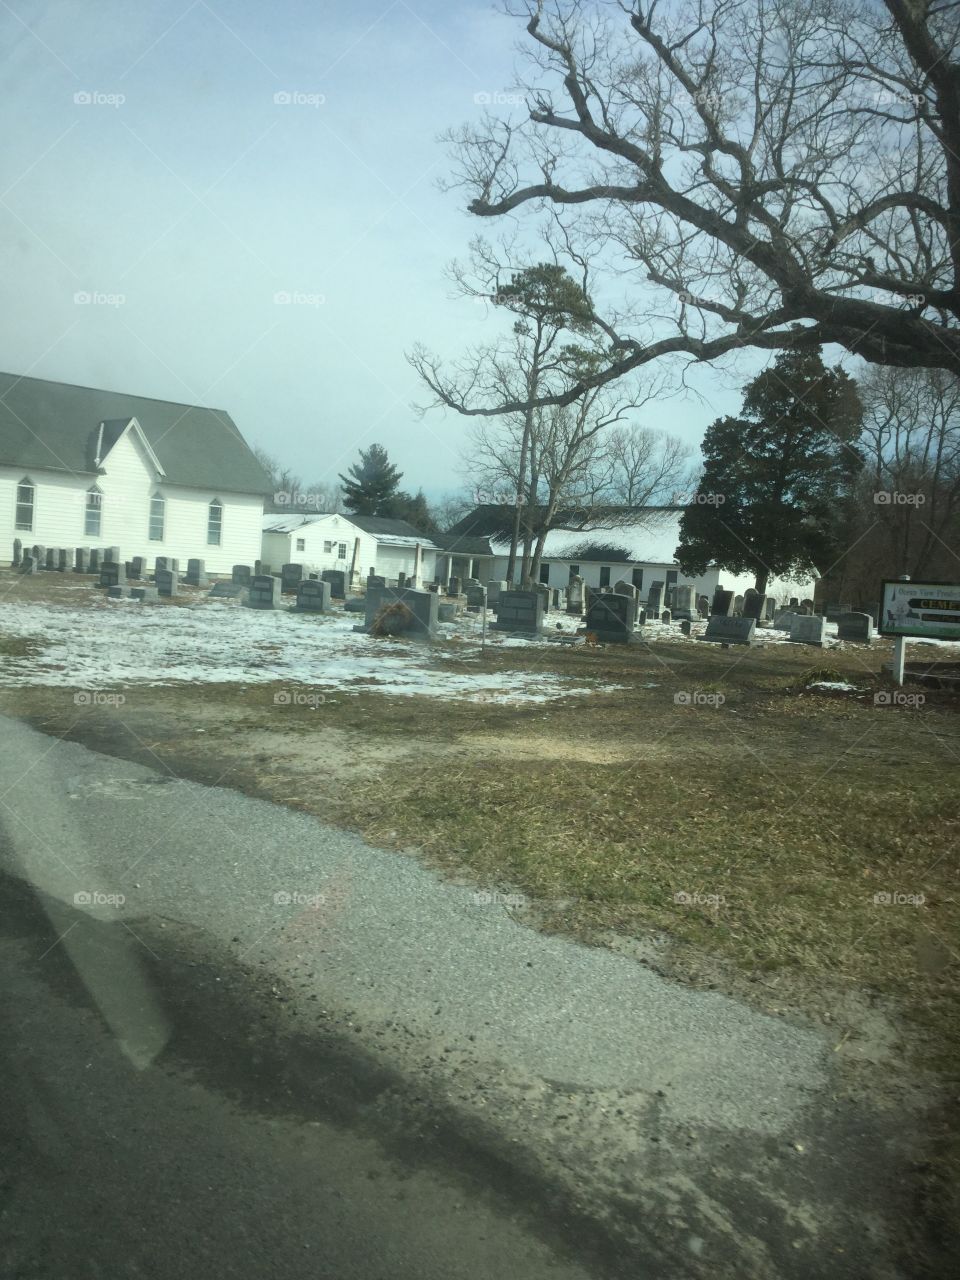 The Church Graveyard